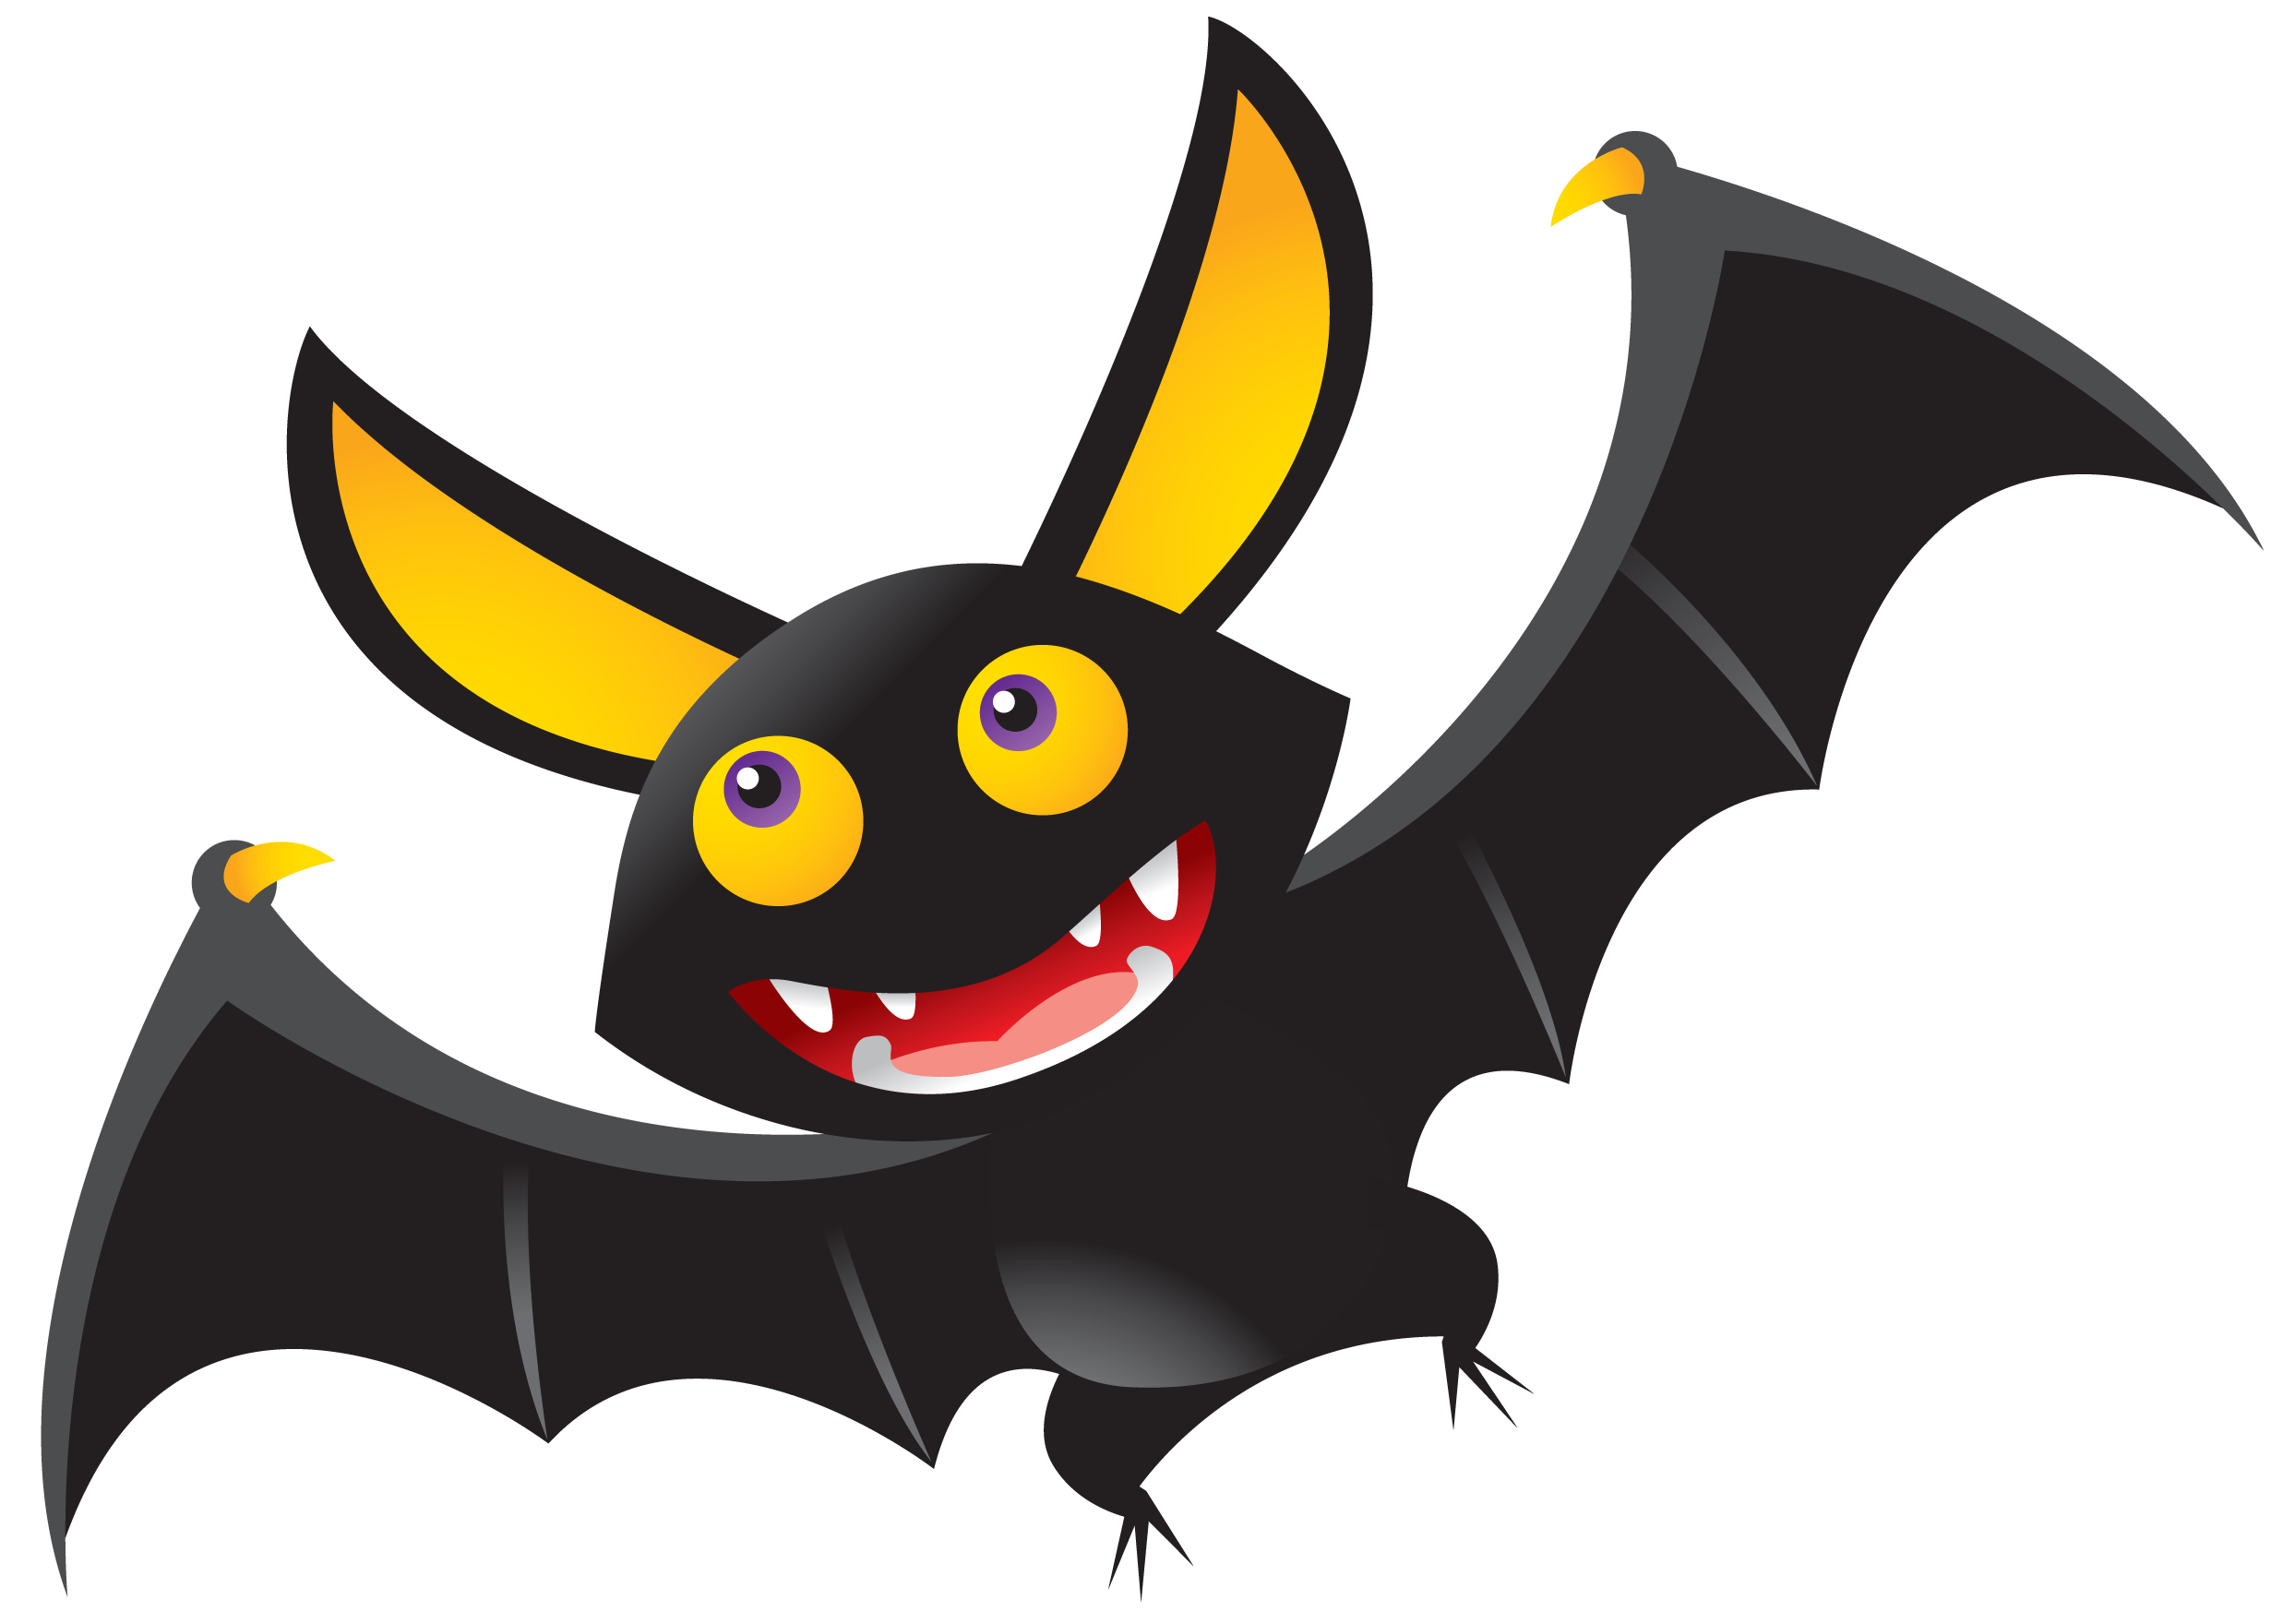 Of Flying Bats Clip Art Image